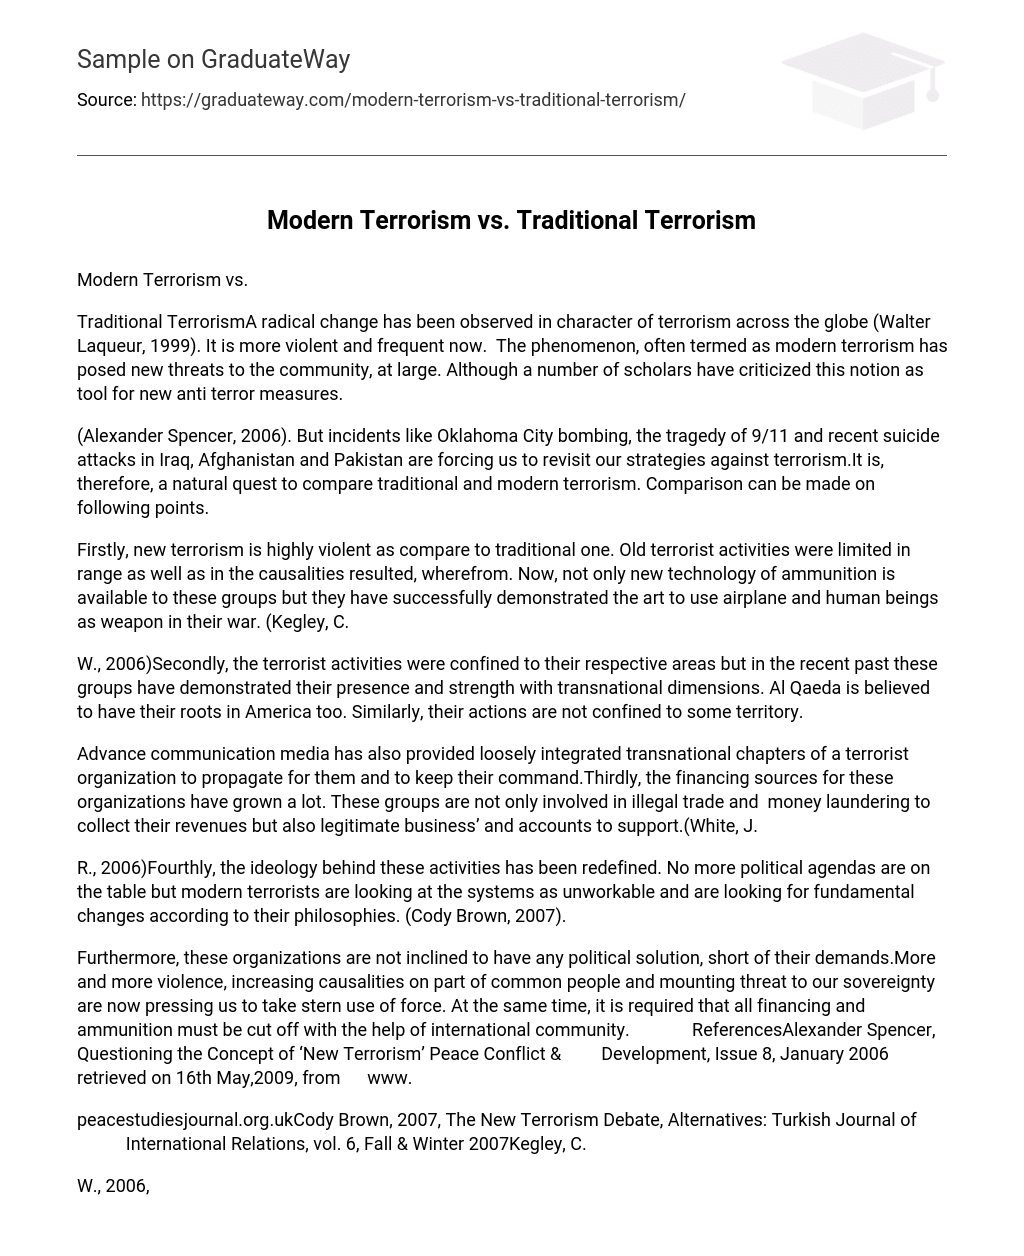 Modern Terrorism vs. Traditional Terrorism